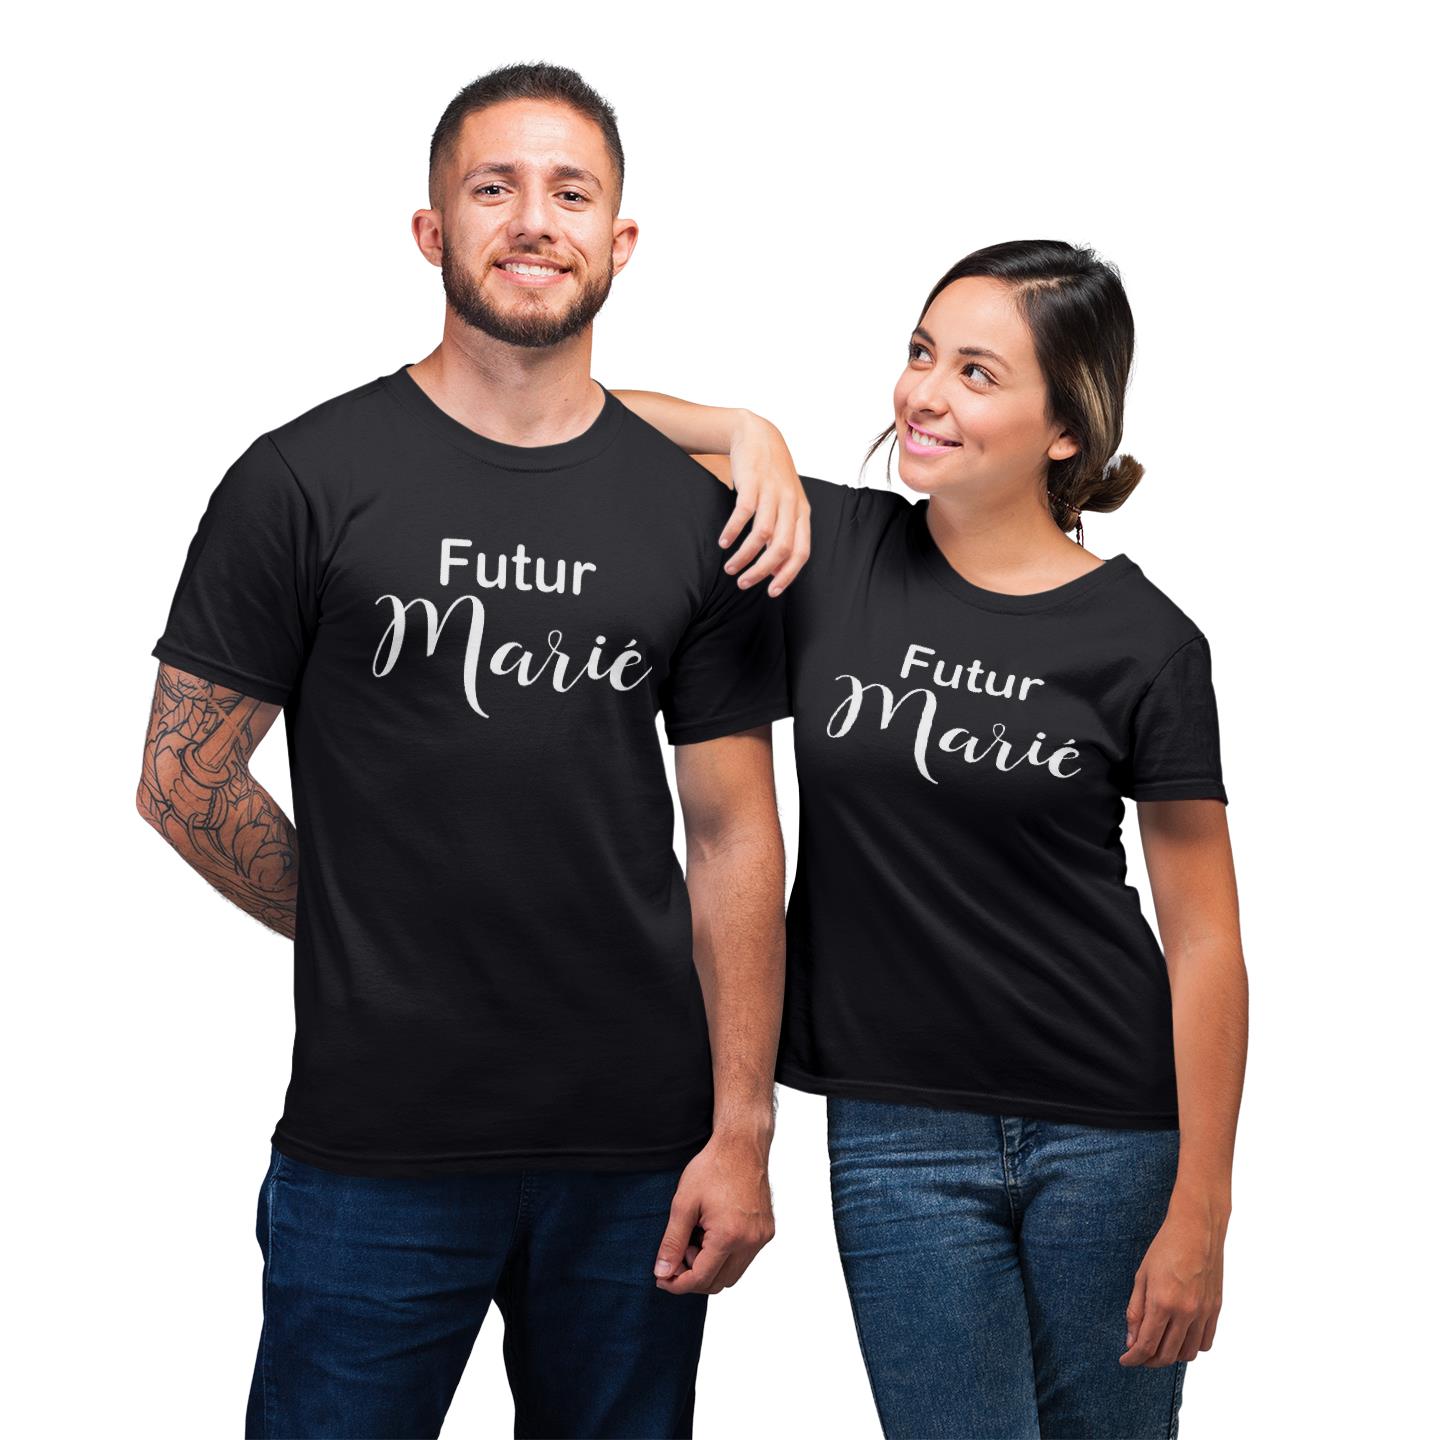 Futur Mari� Shirt For Couple Matching His Hers T-shirt